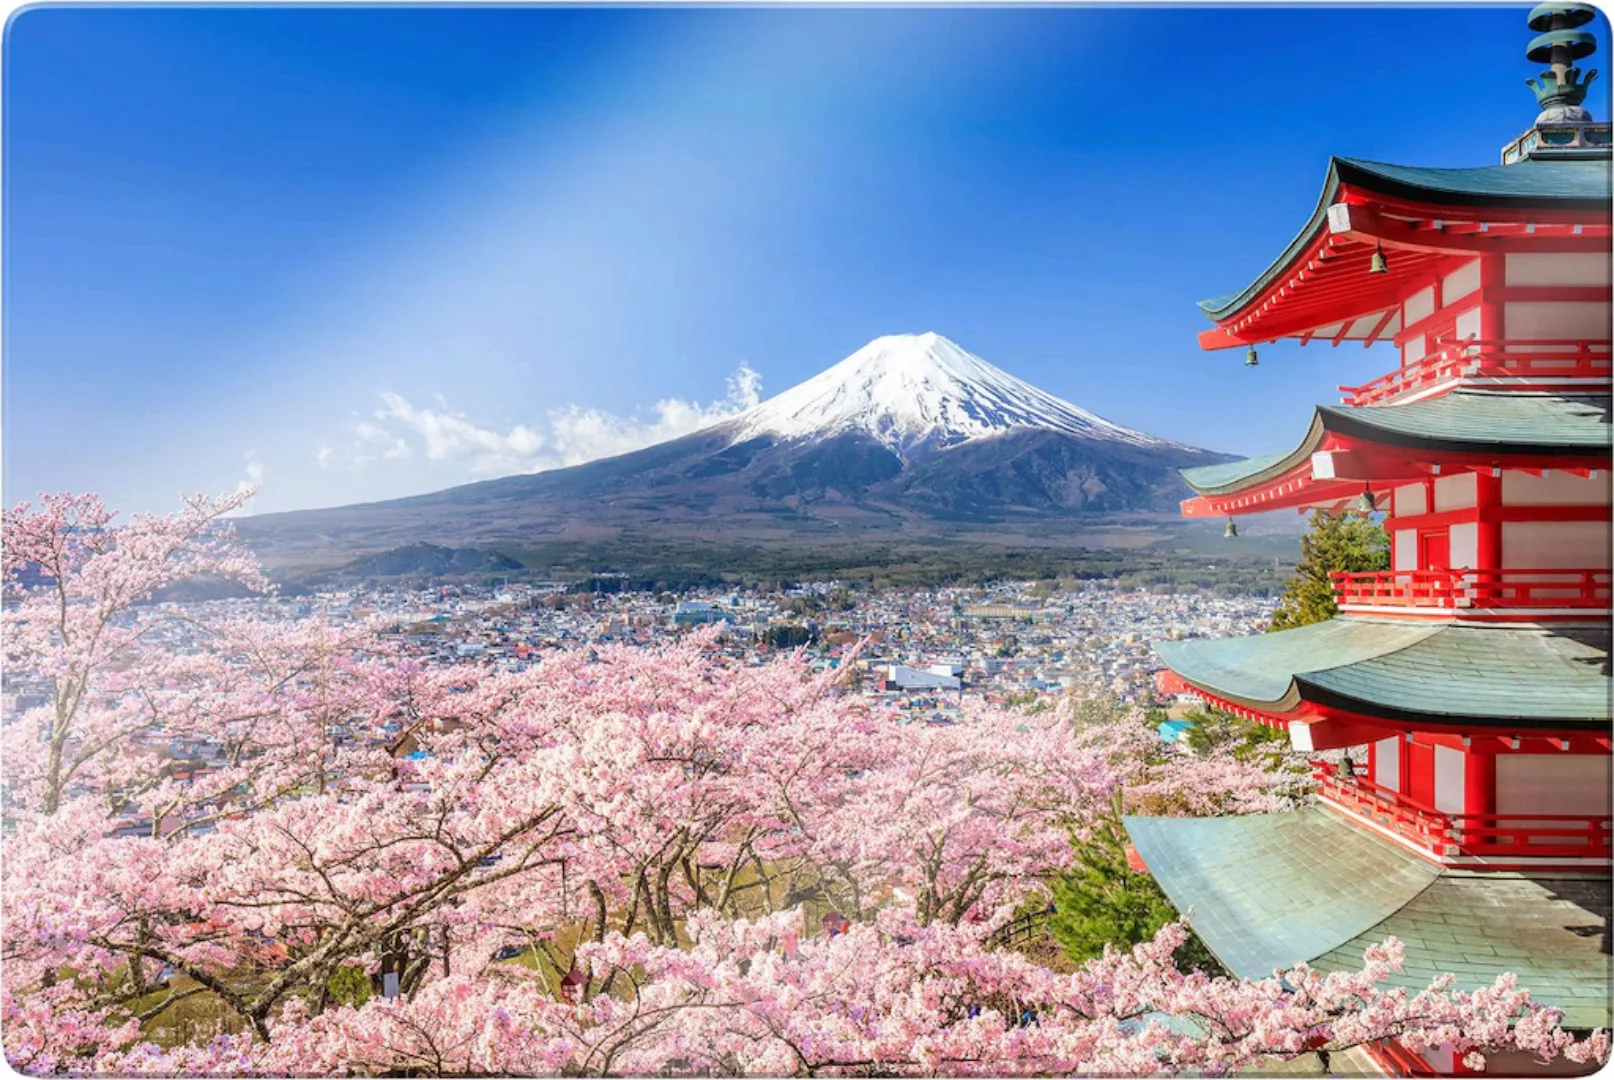 Wall-Art Glasbild "Mount Fuji", Sonnenuntergang, Glasposter modern günstig online kaufen